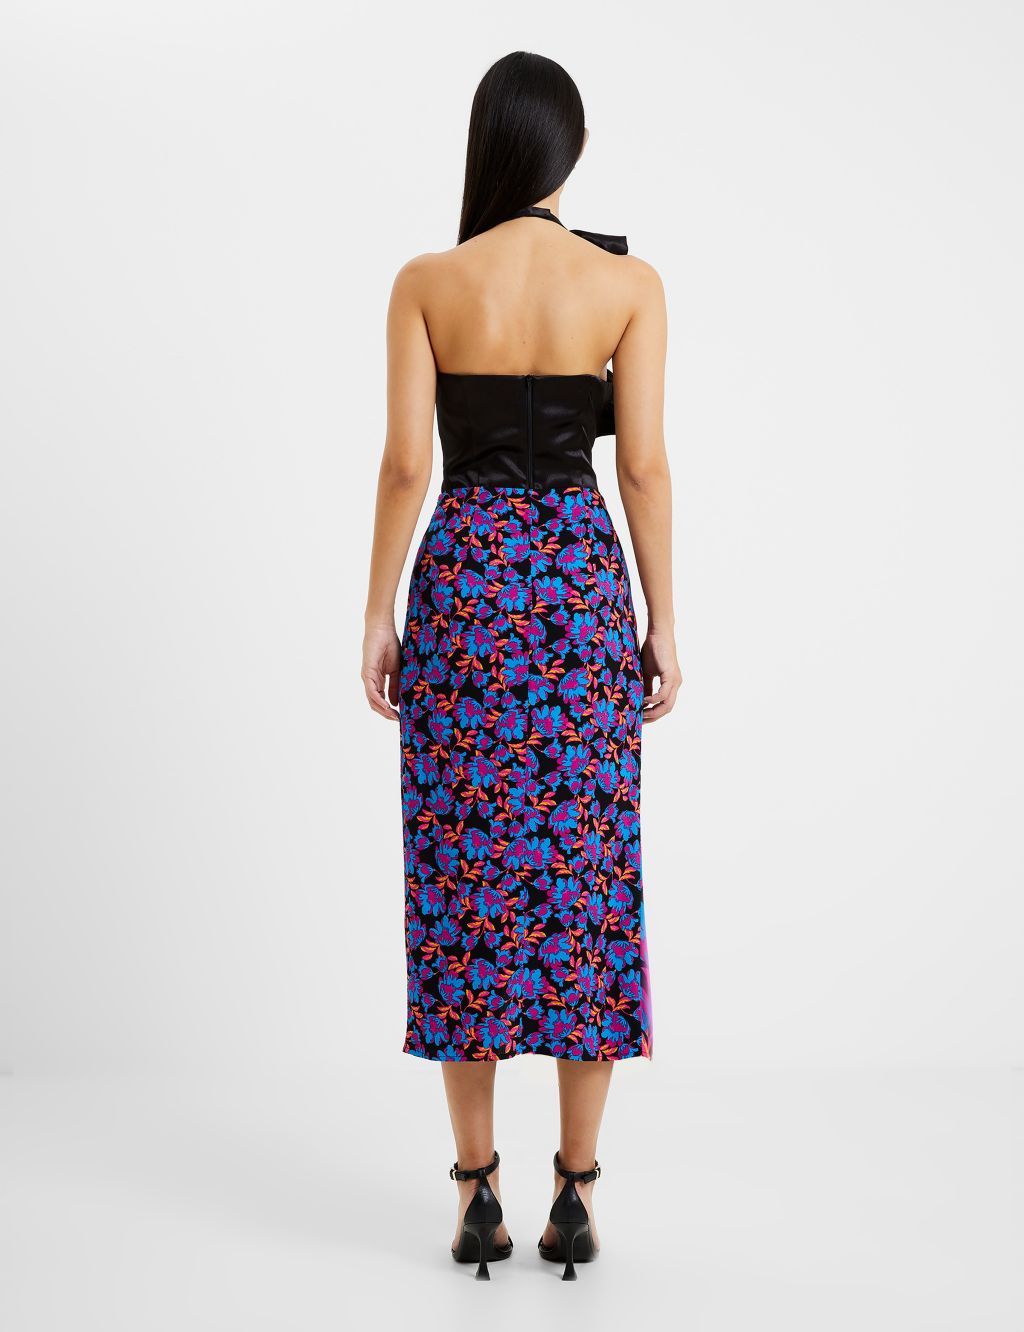 Floral Midi Wrap Skirt image 4